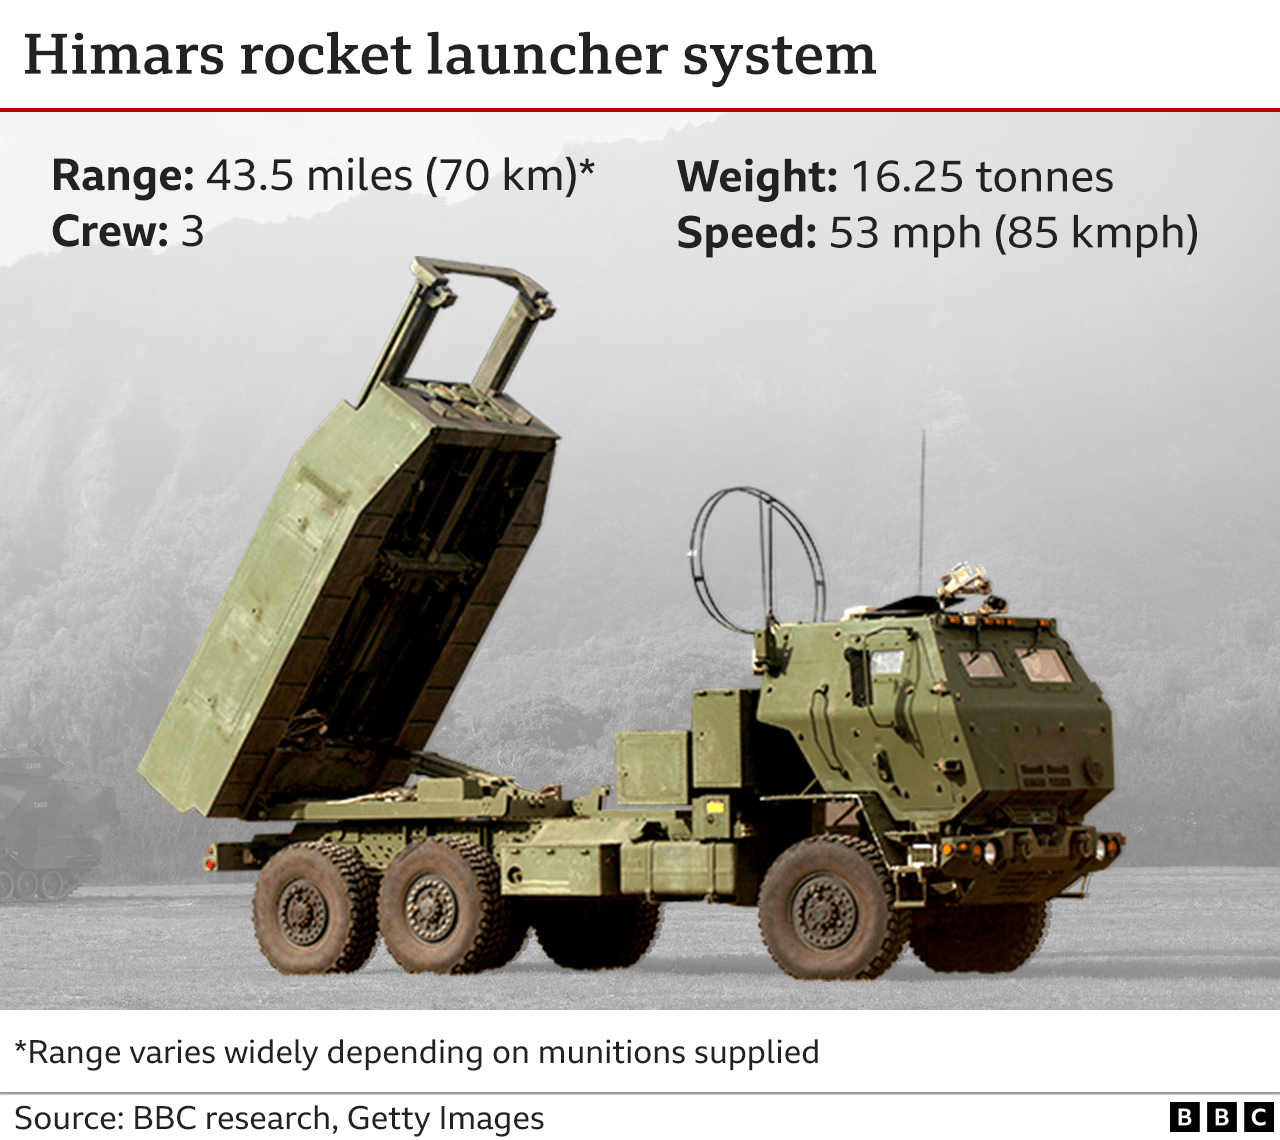 Graphic on Himars multiple rocket launcher